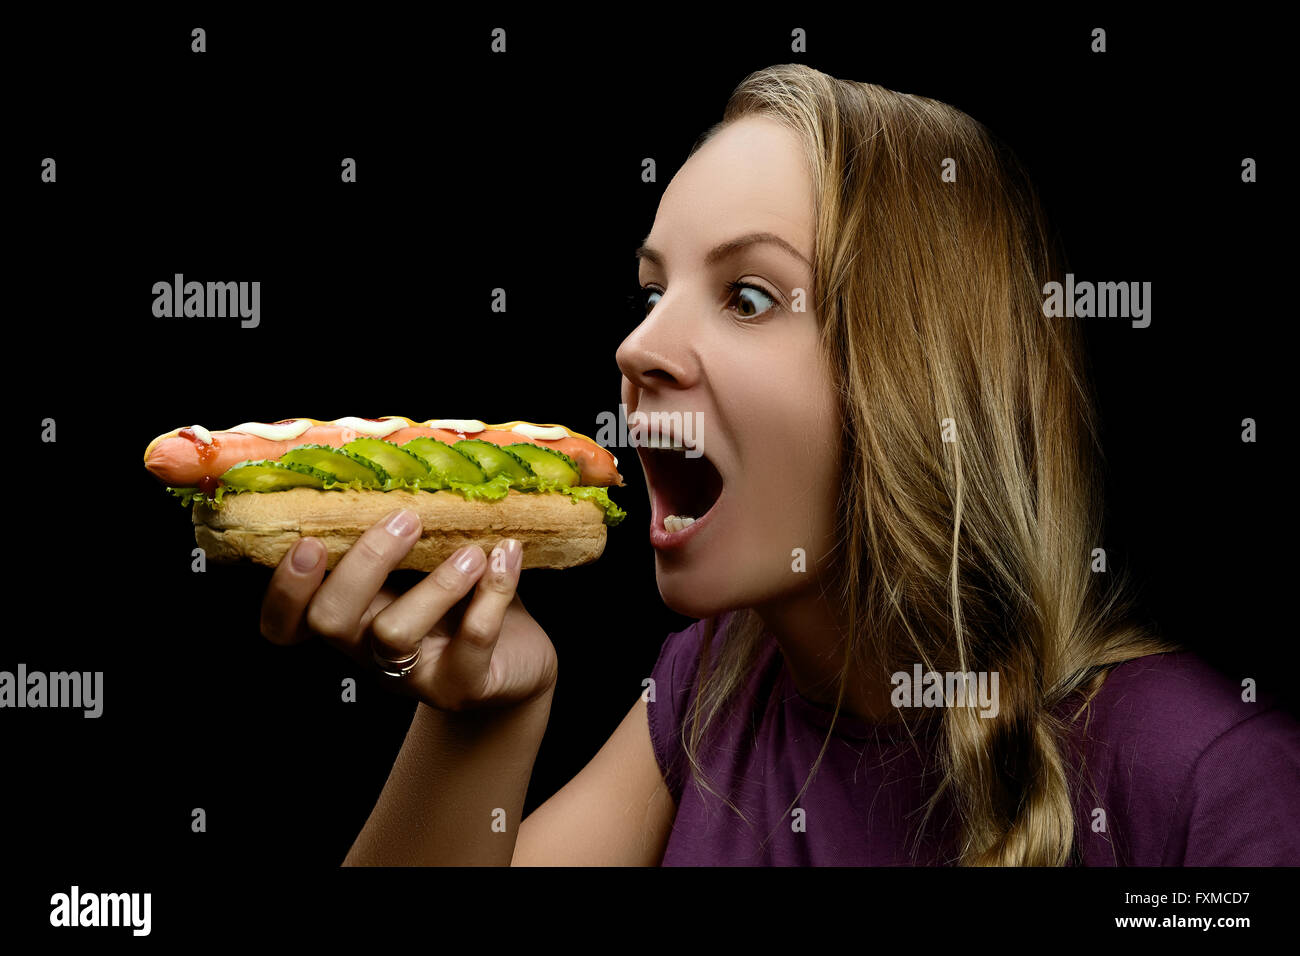 Young girl eating a hotdog Stock Photo